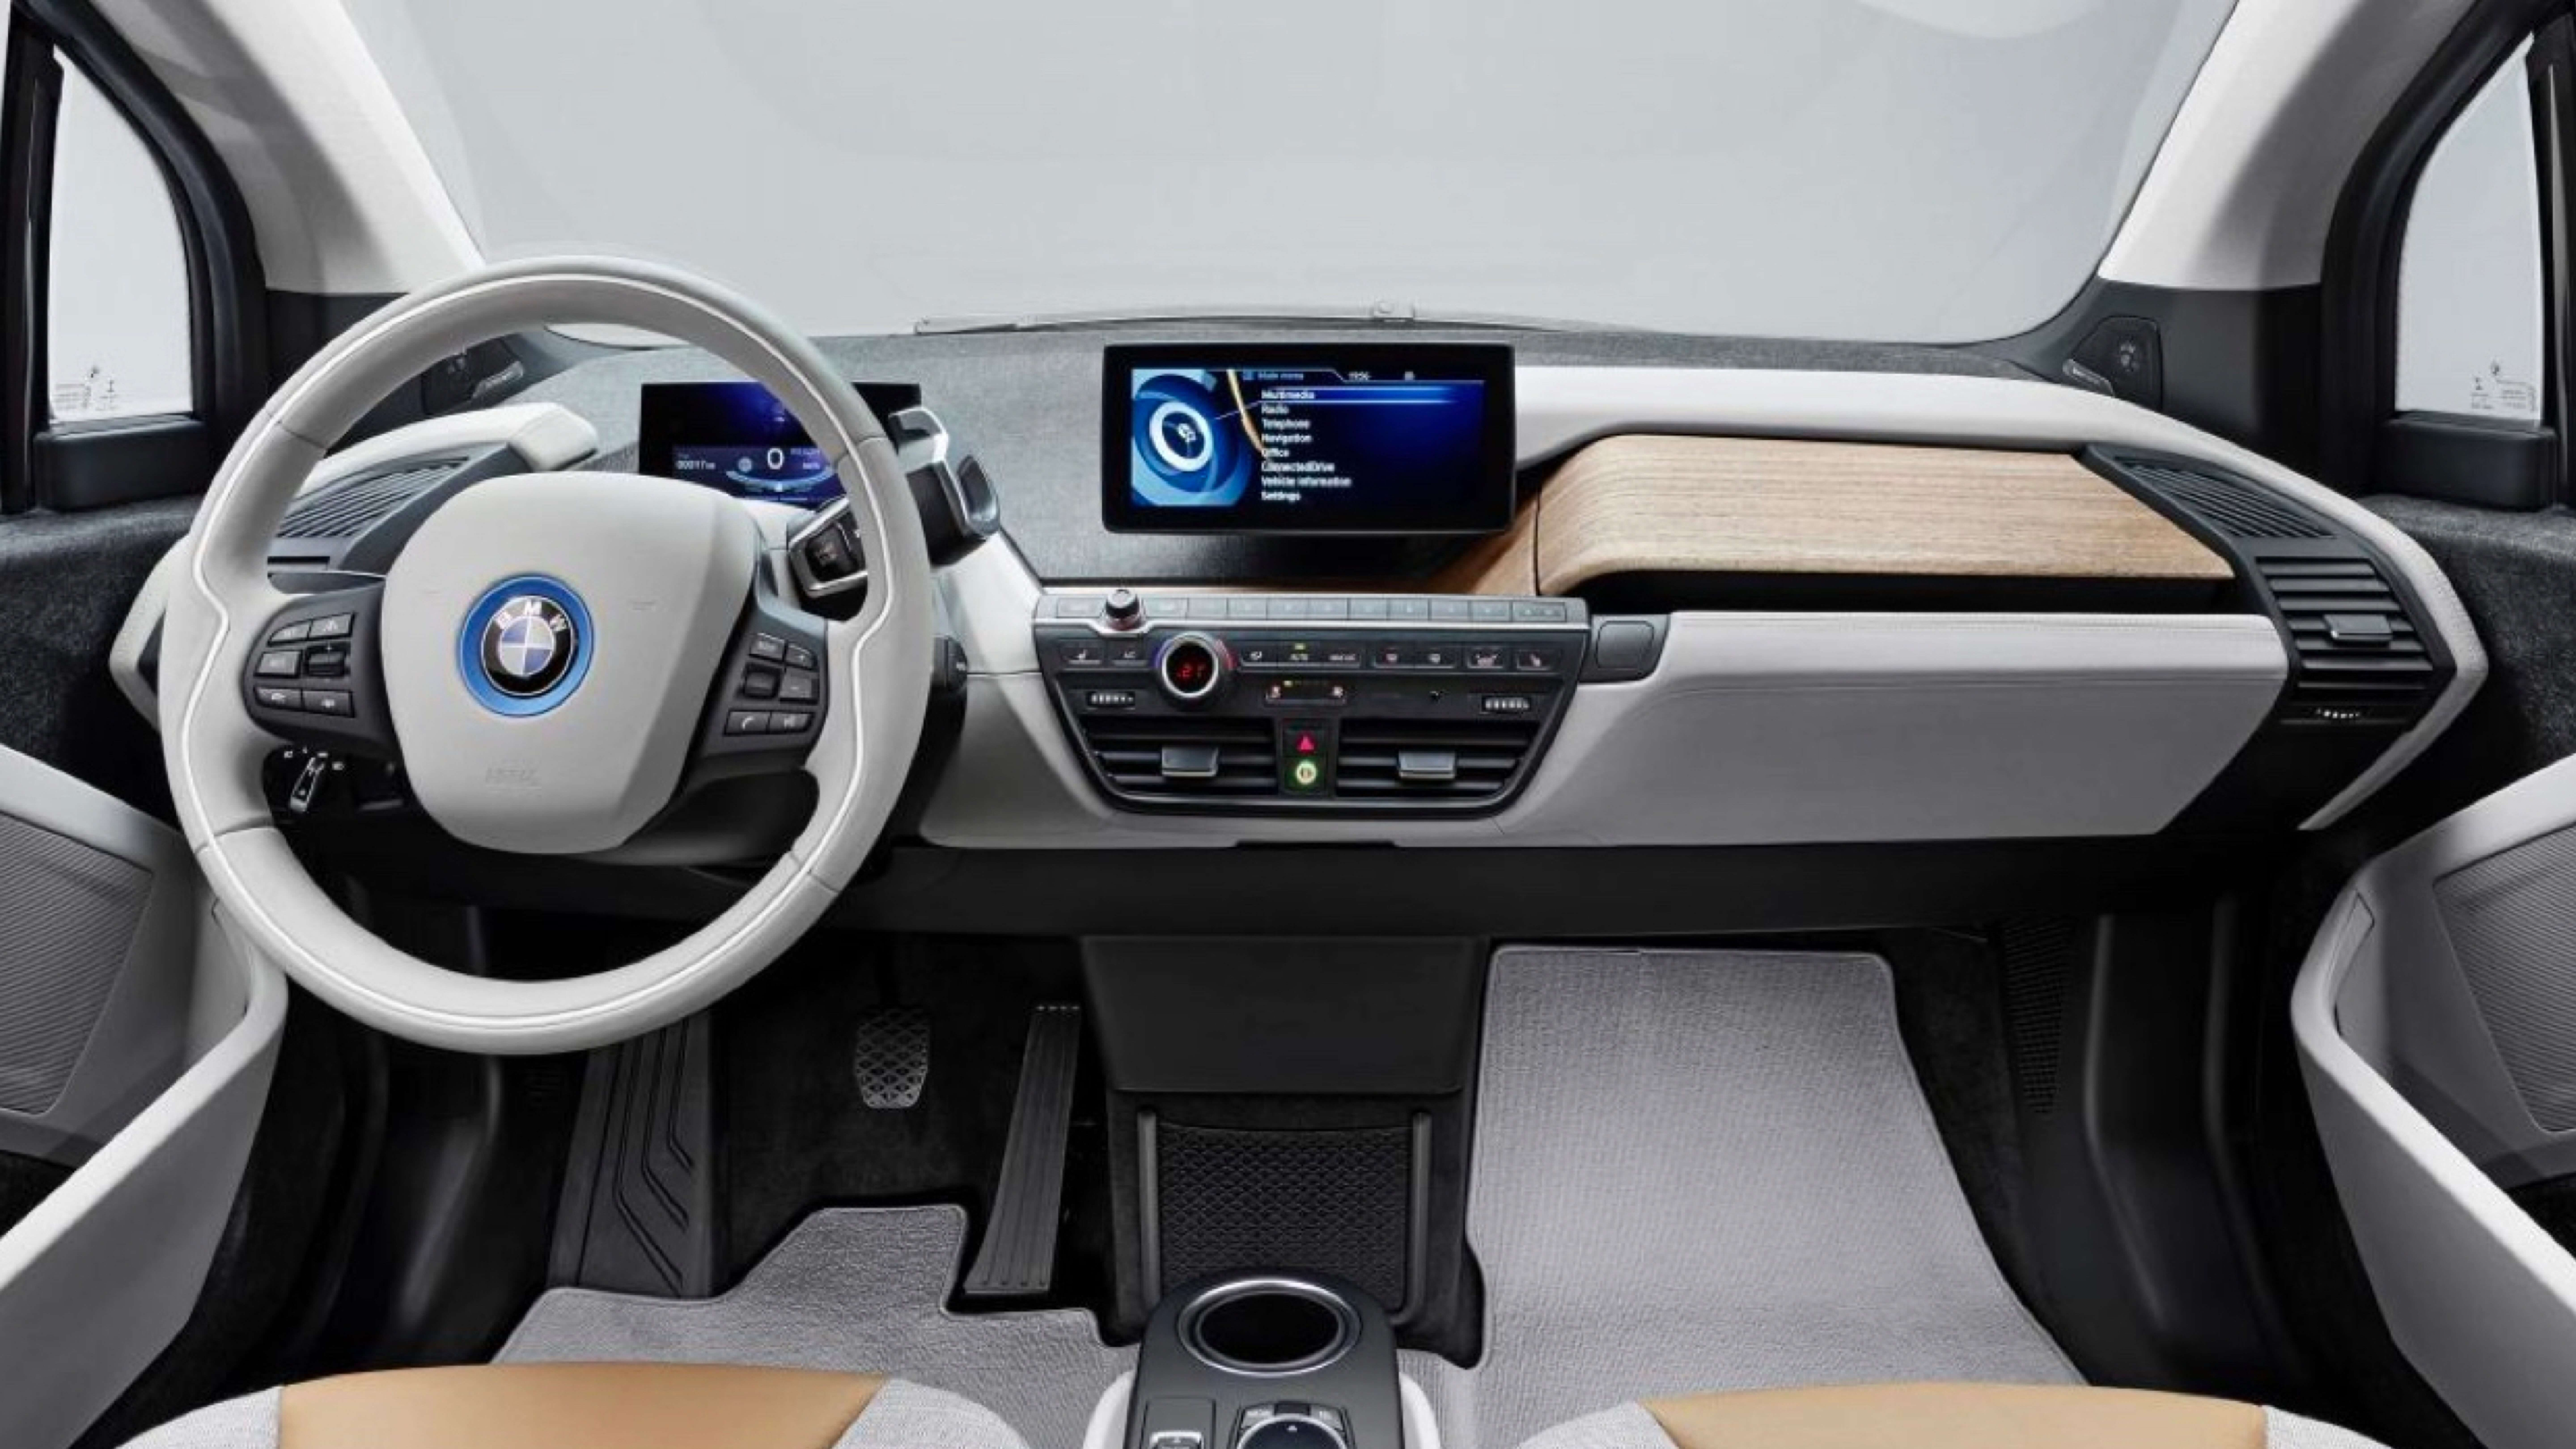 the interior of a BMW concept car